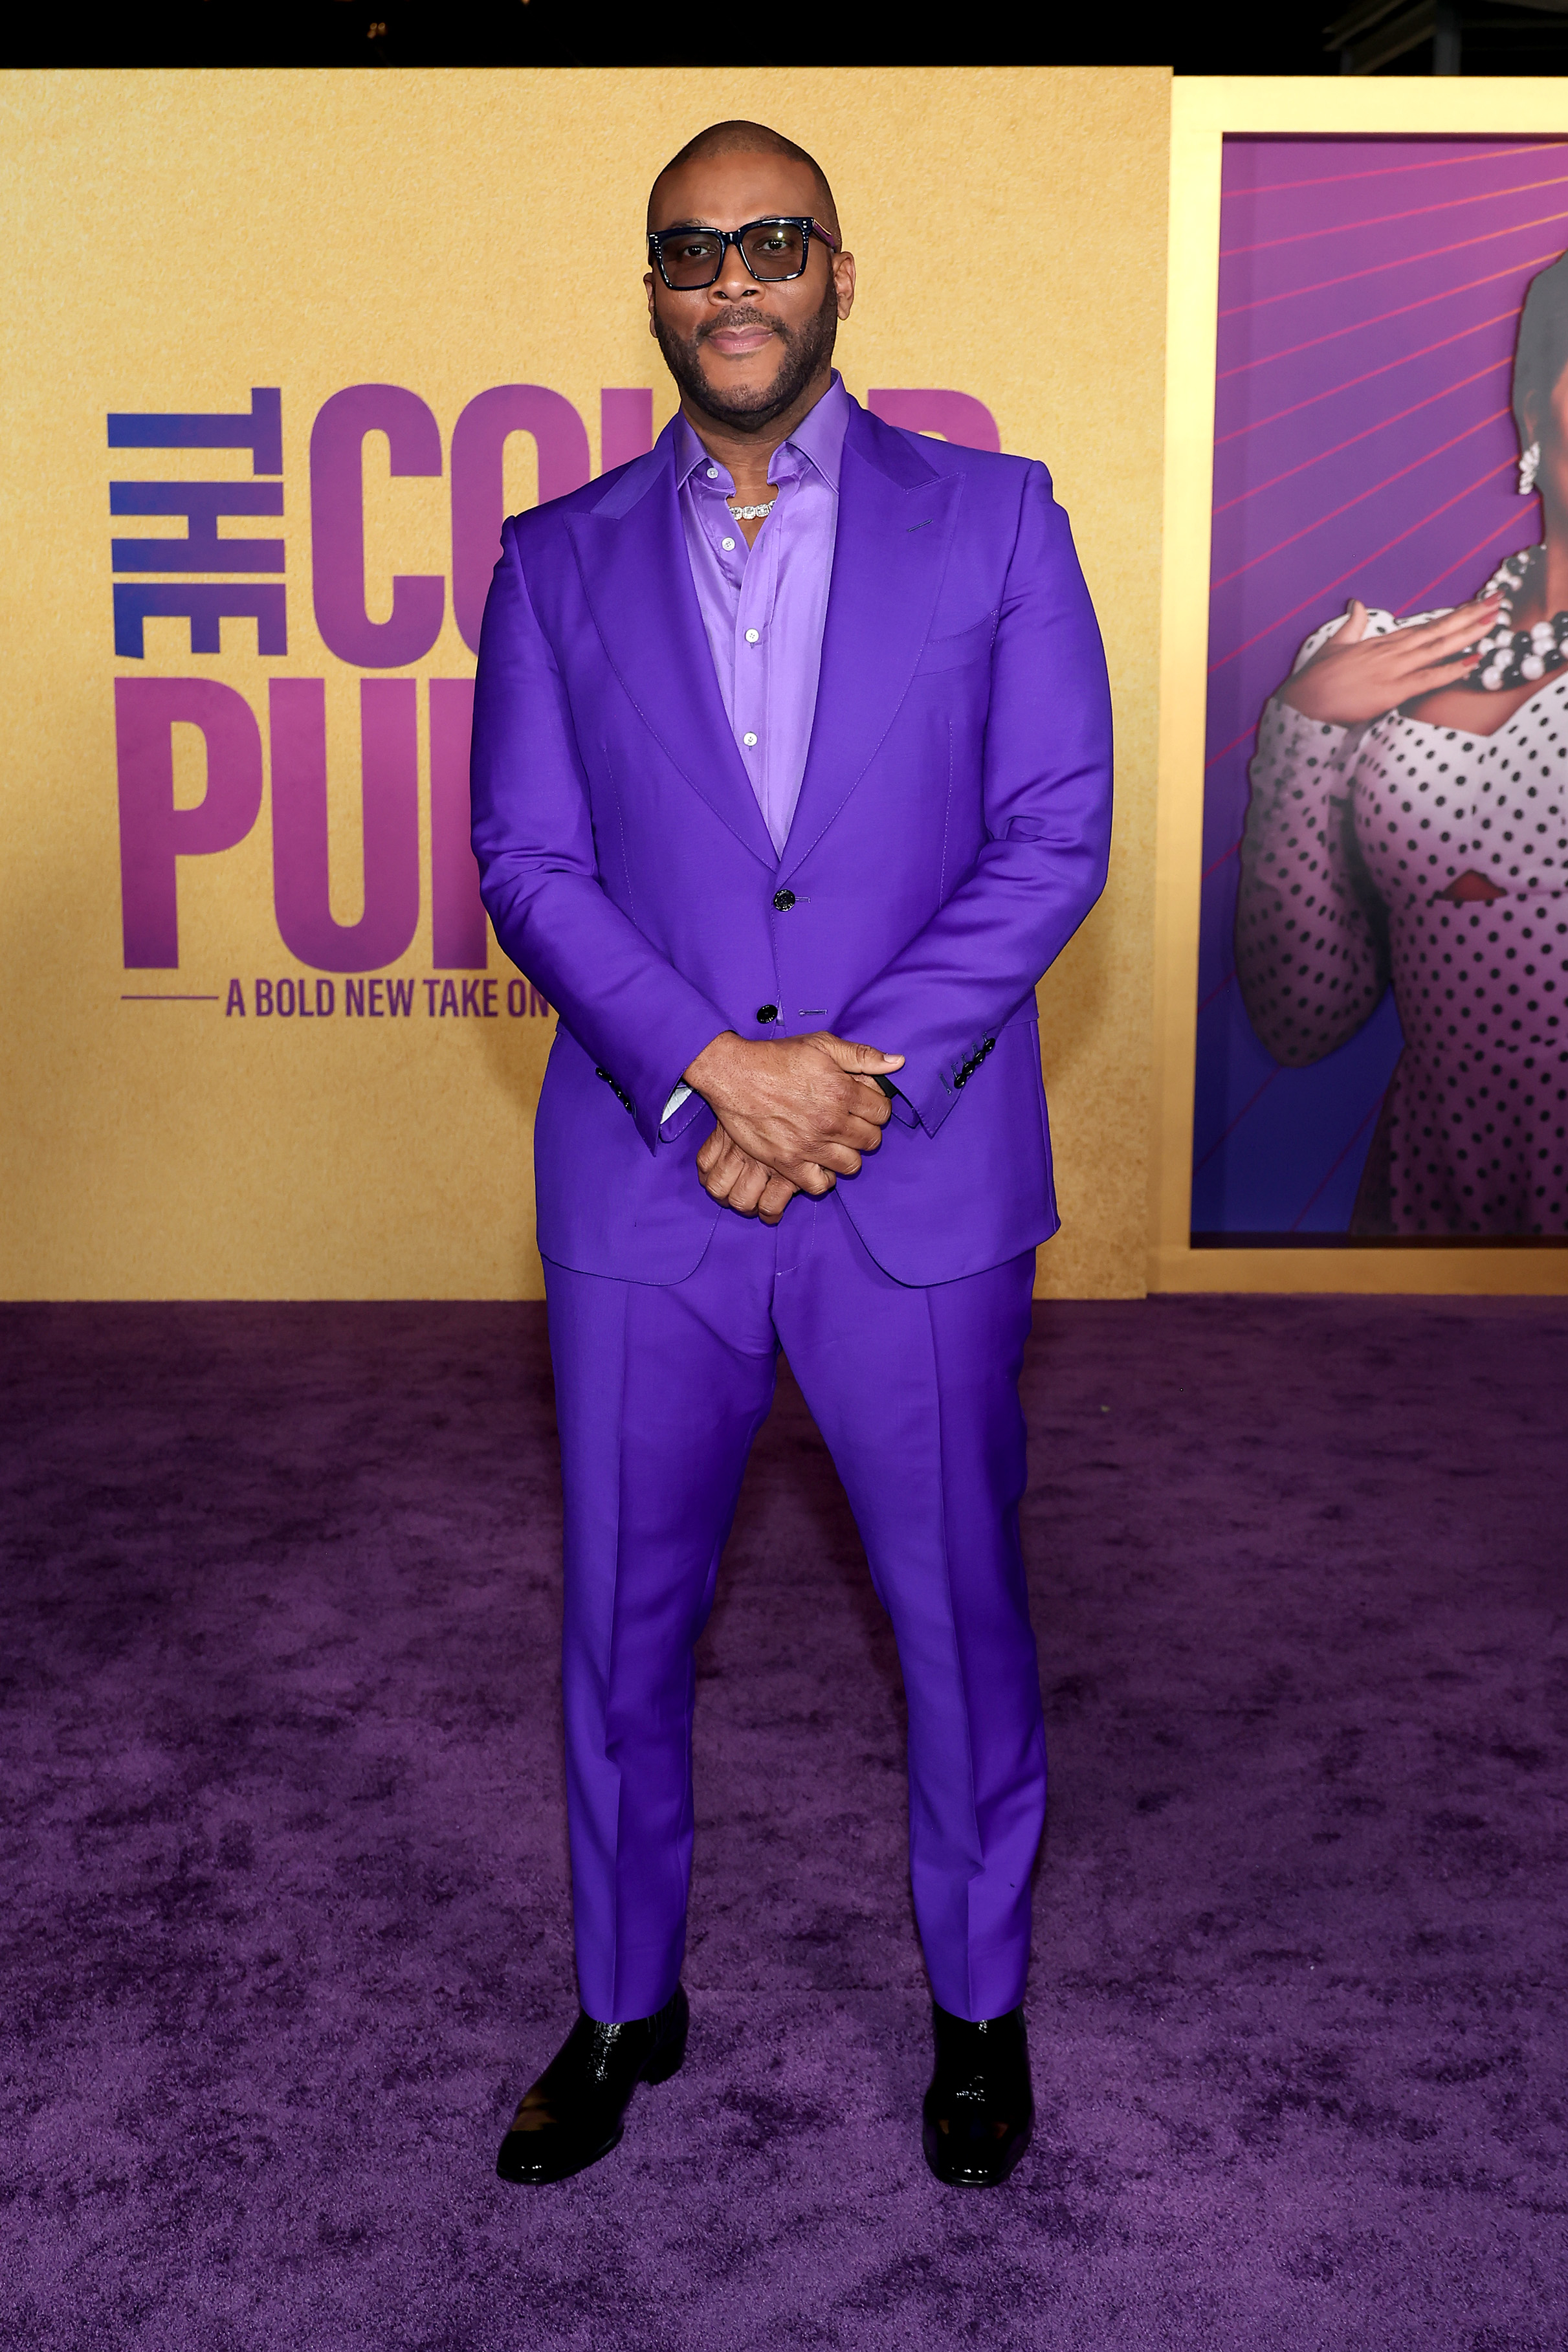 Tyler in a purple suit, no tie